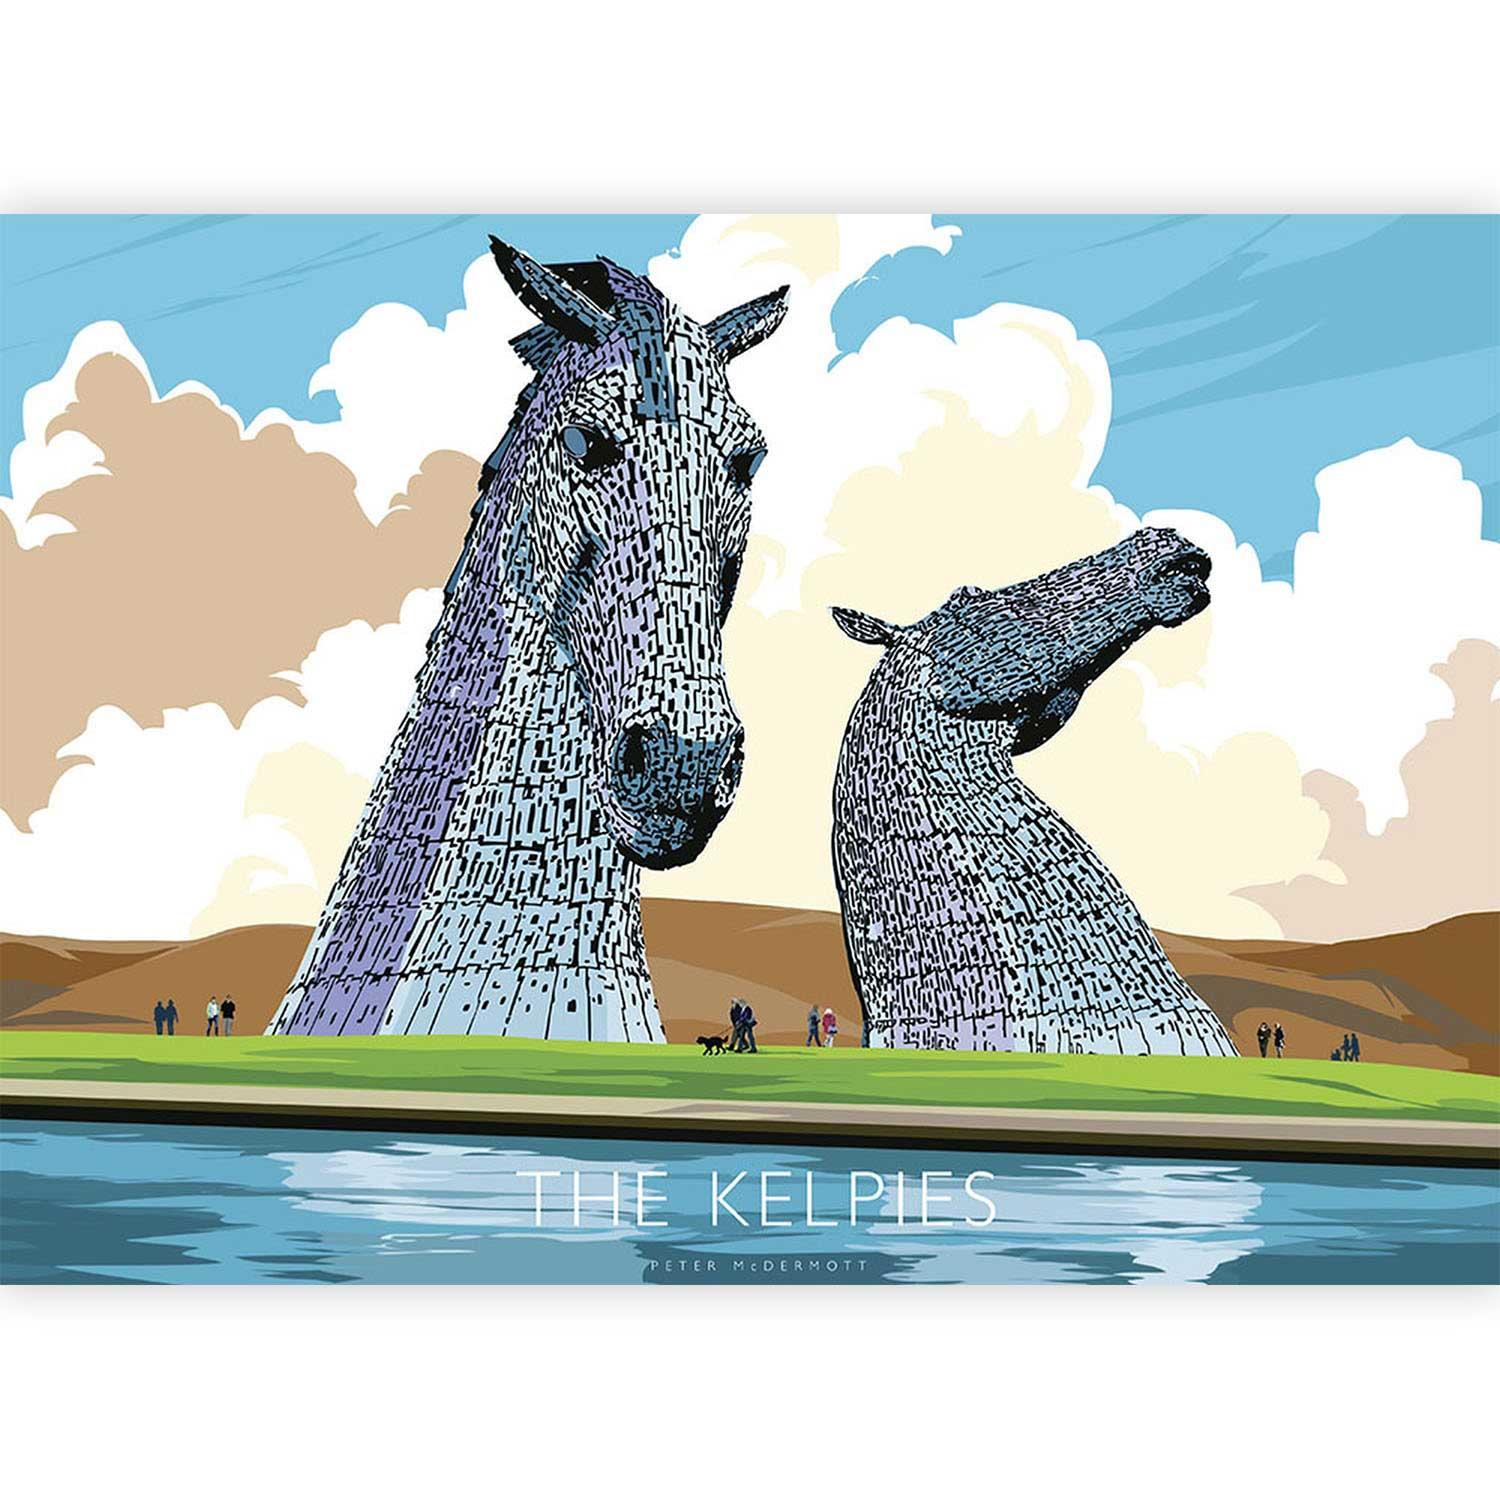 The Kelpies by Peter McDermott